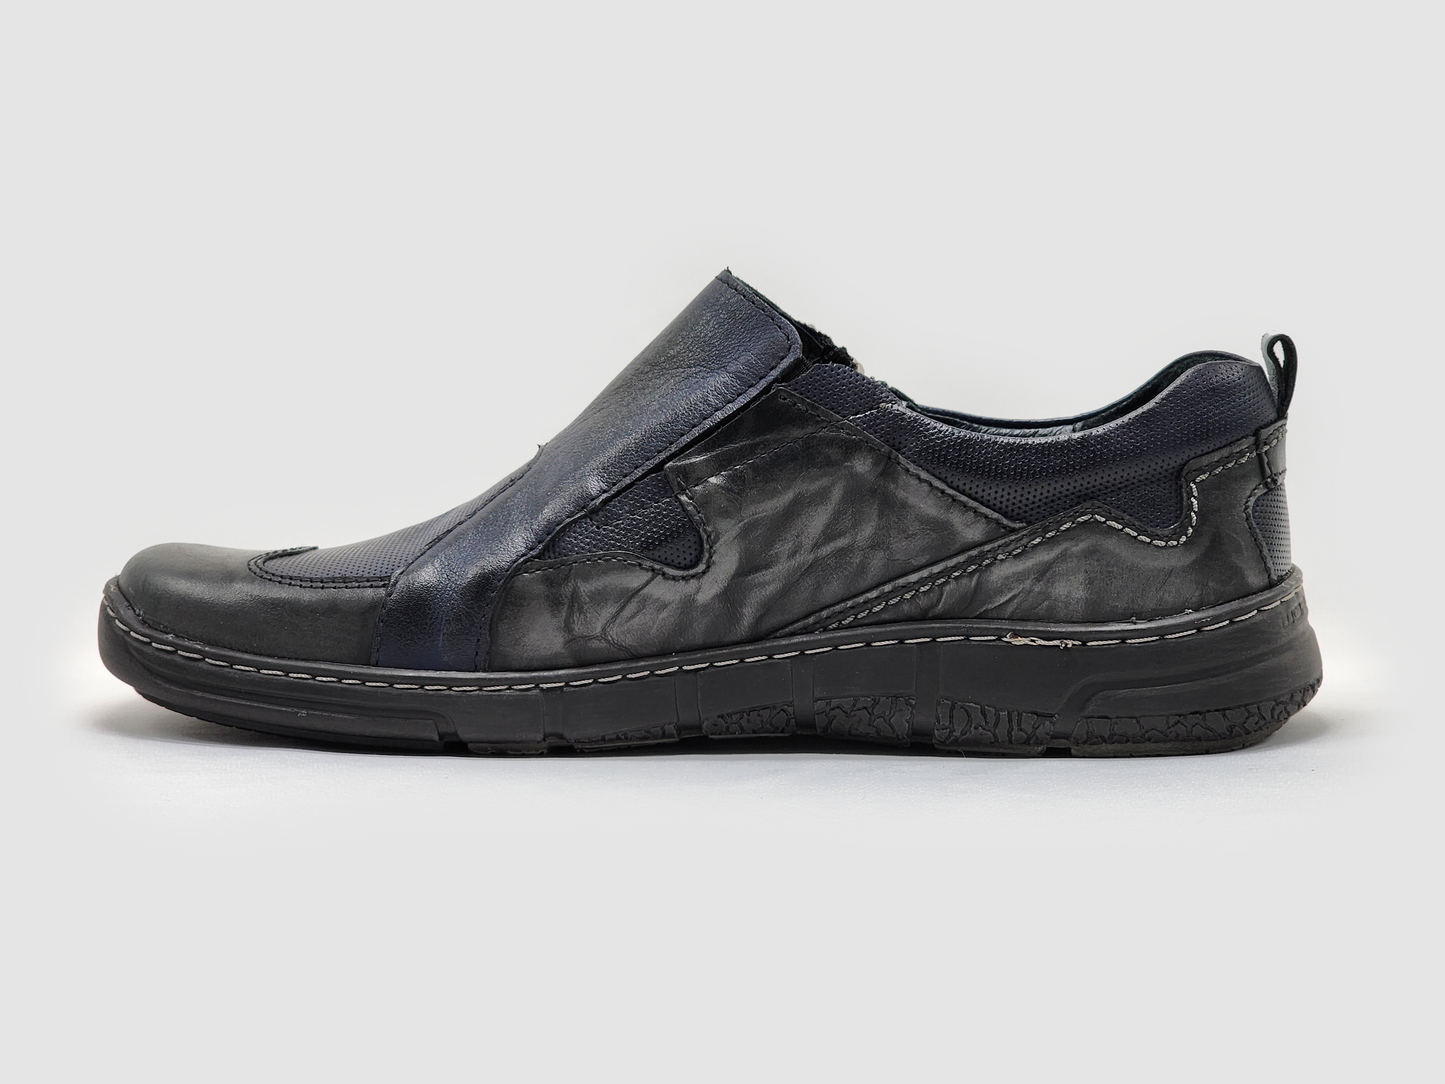 Men's Everyday Slip-On Leather Shoes - Black/Navy - Kacper Global Shoes 